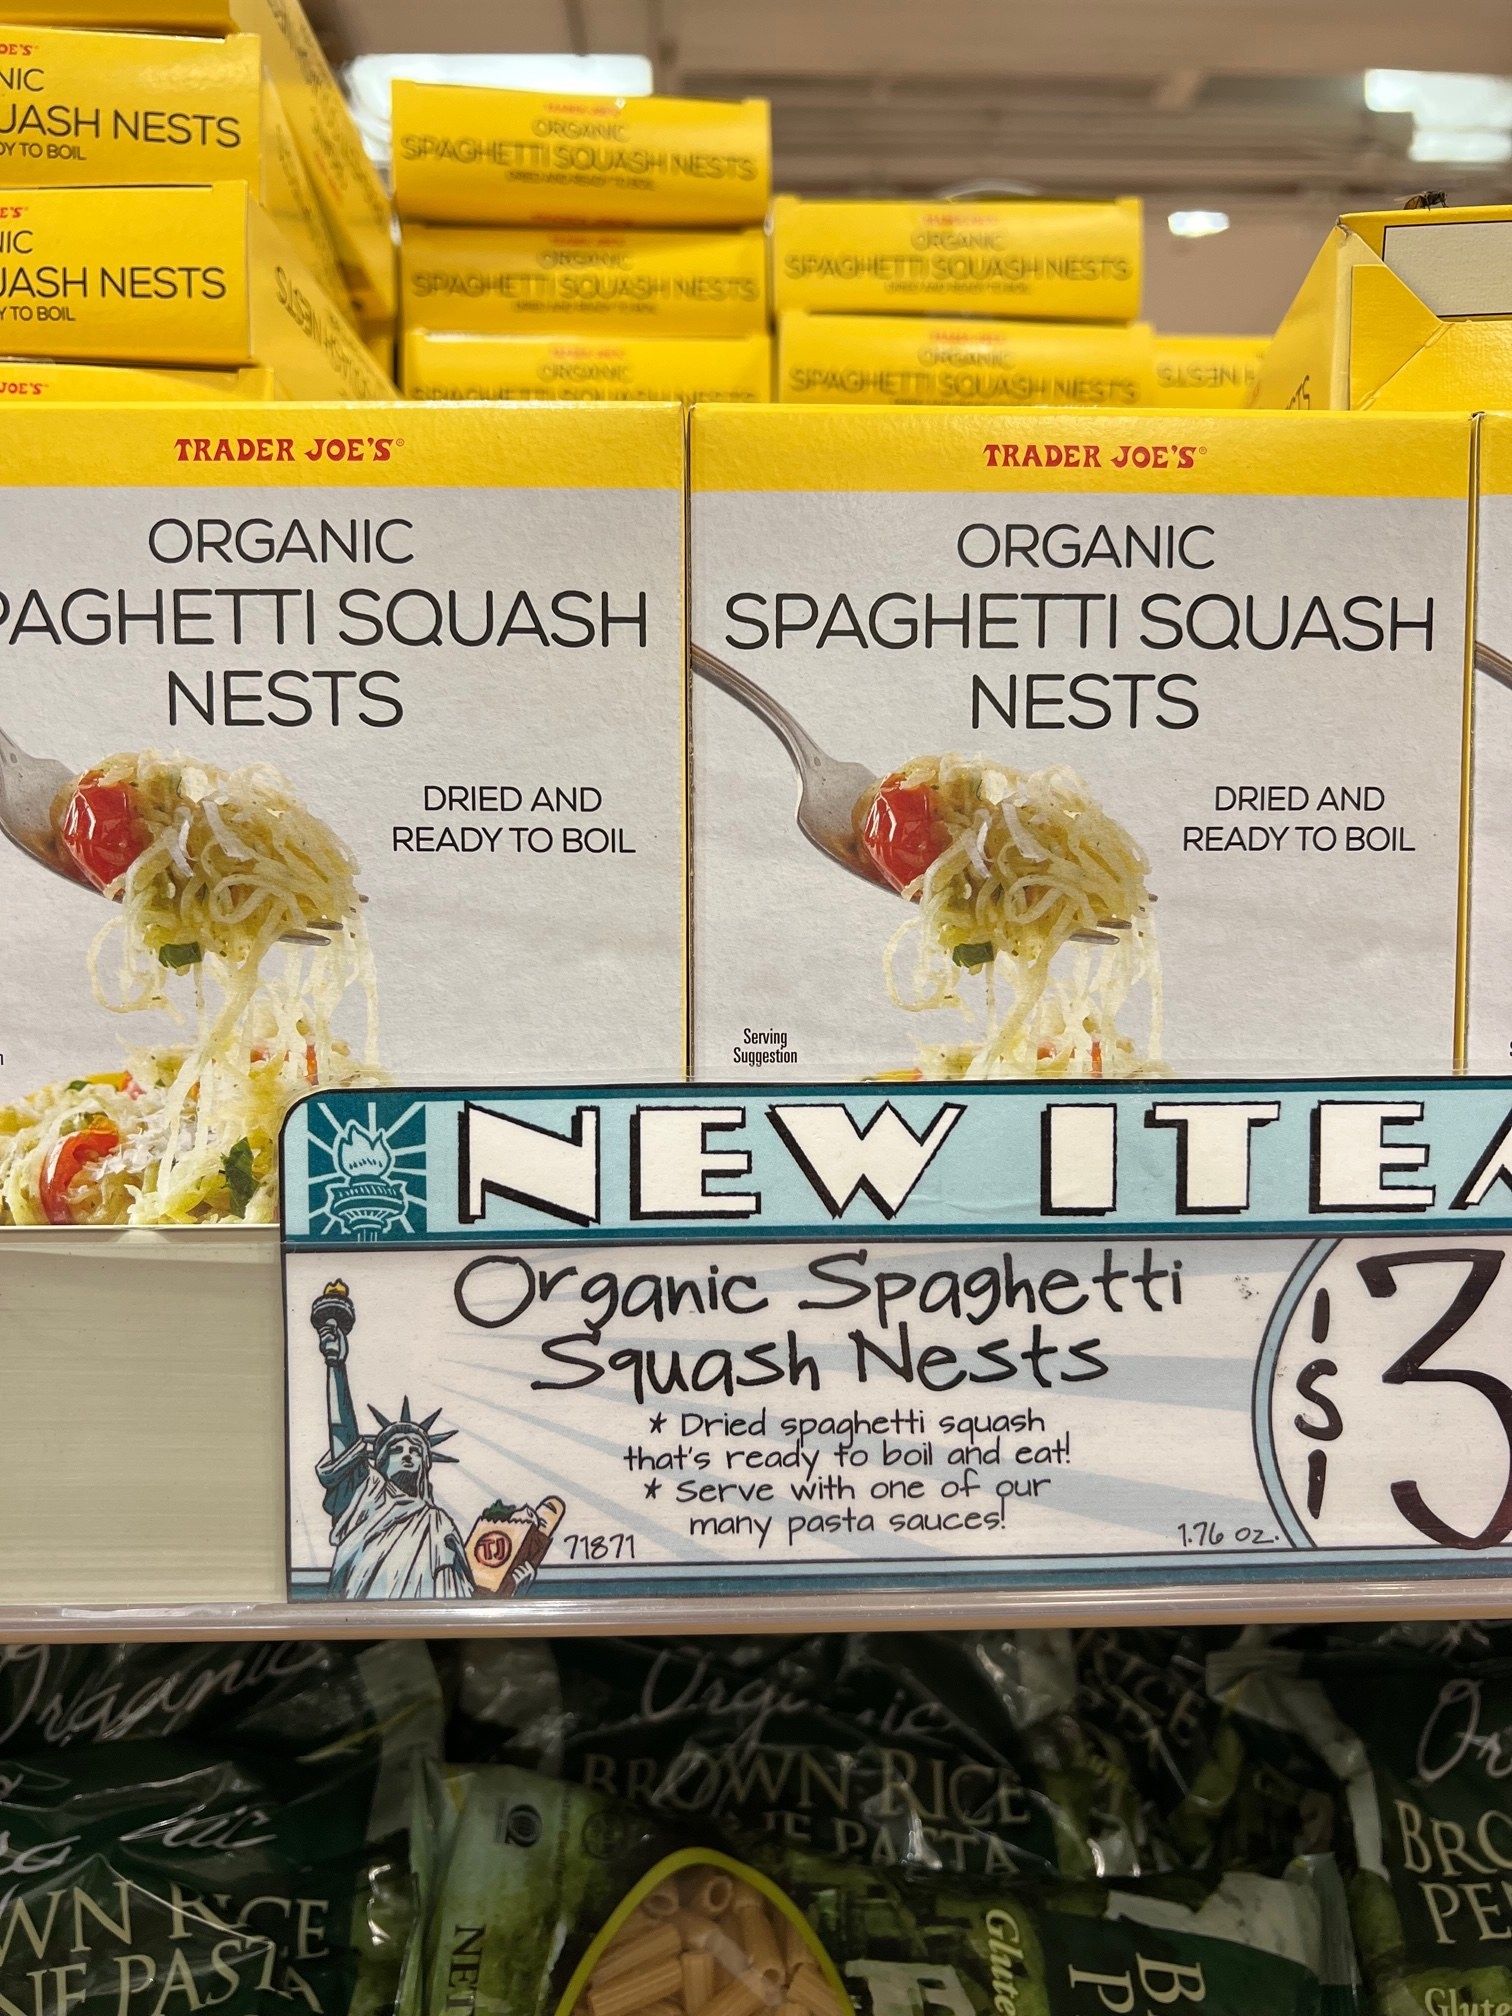 Boxes of Organic Spaghetti Squash Nests